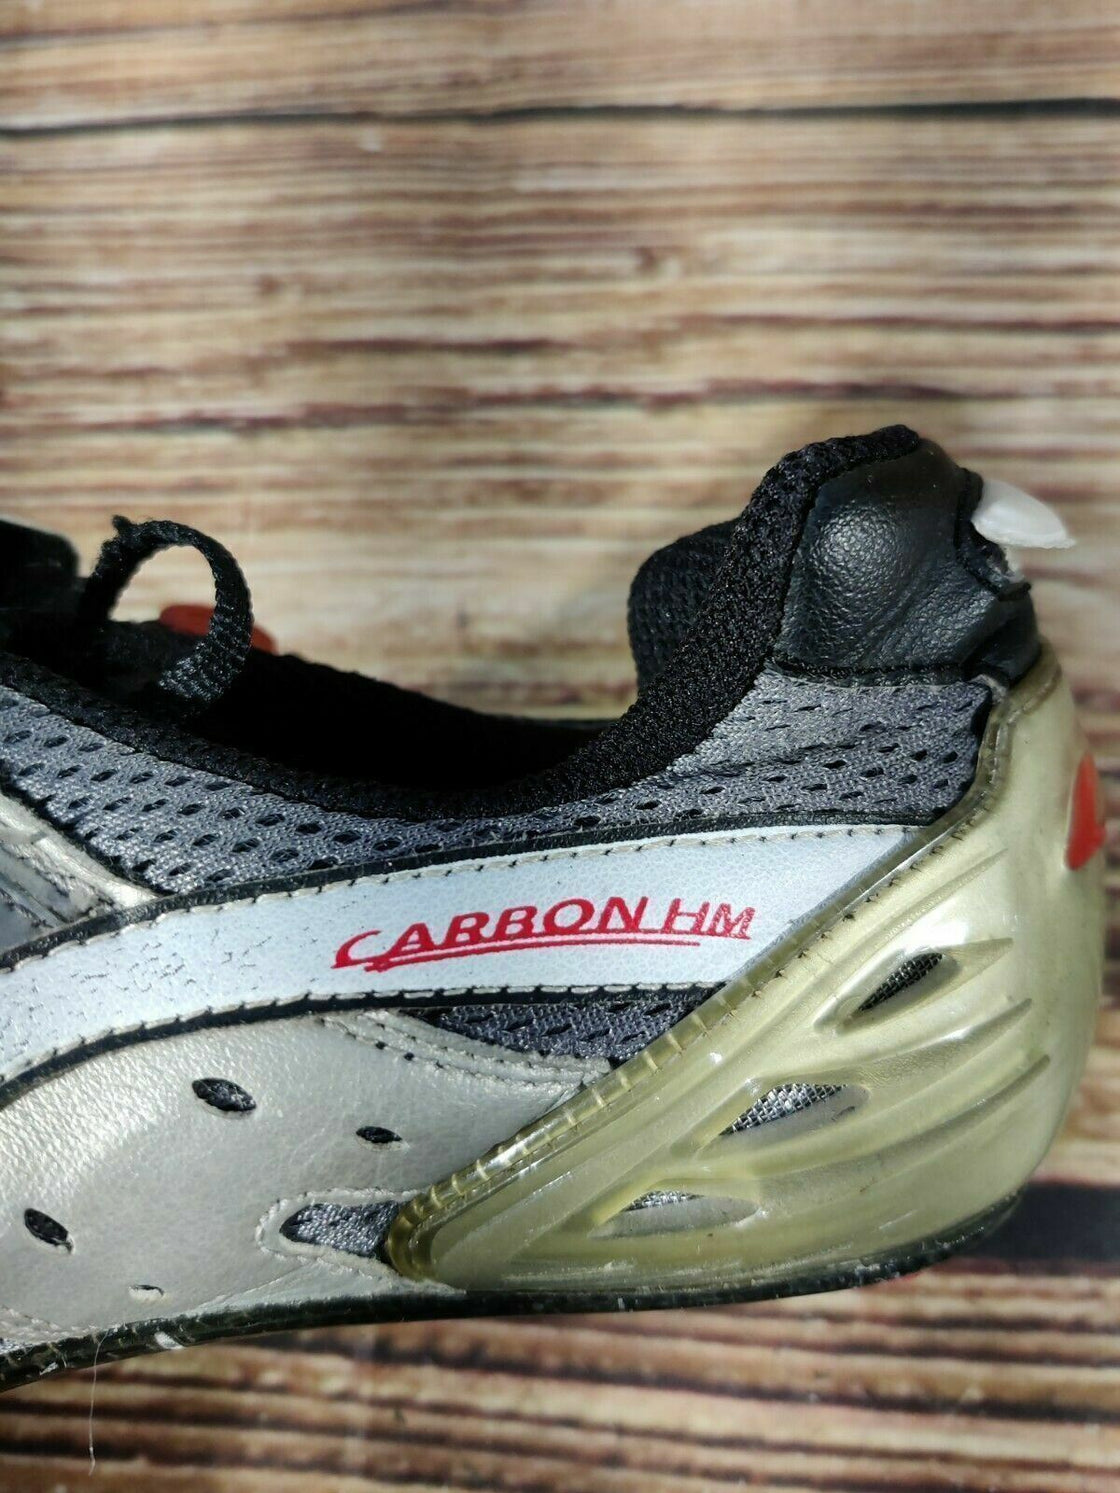 Louis Garneau Carbon Road Cycling Shoes Bicycle Shoes Size EU41 Road bike shoes